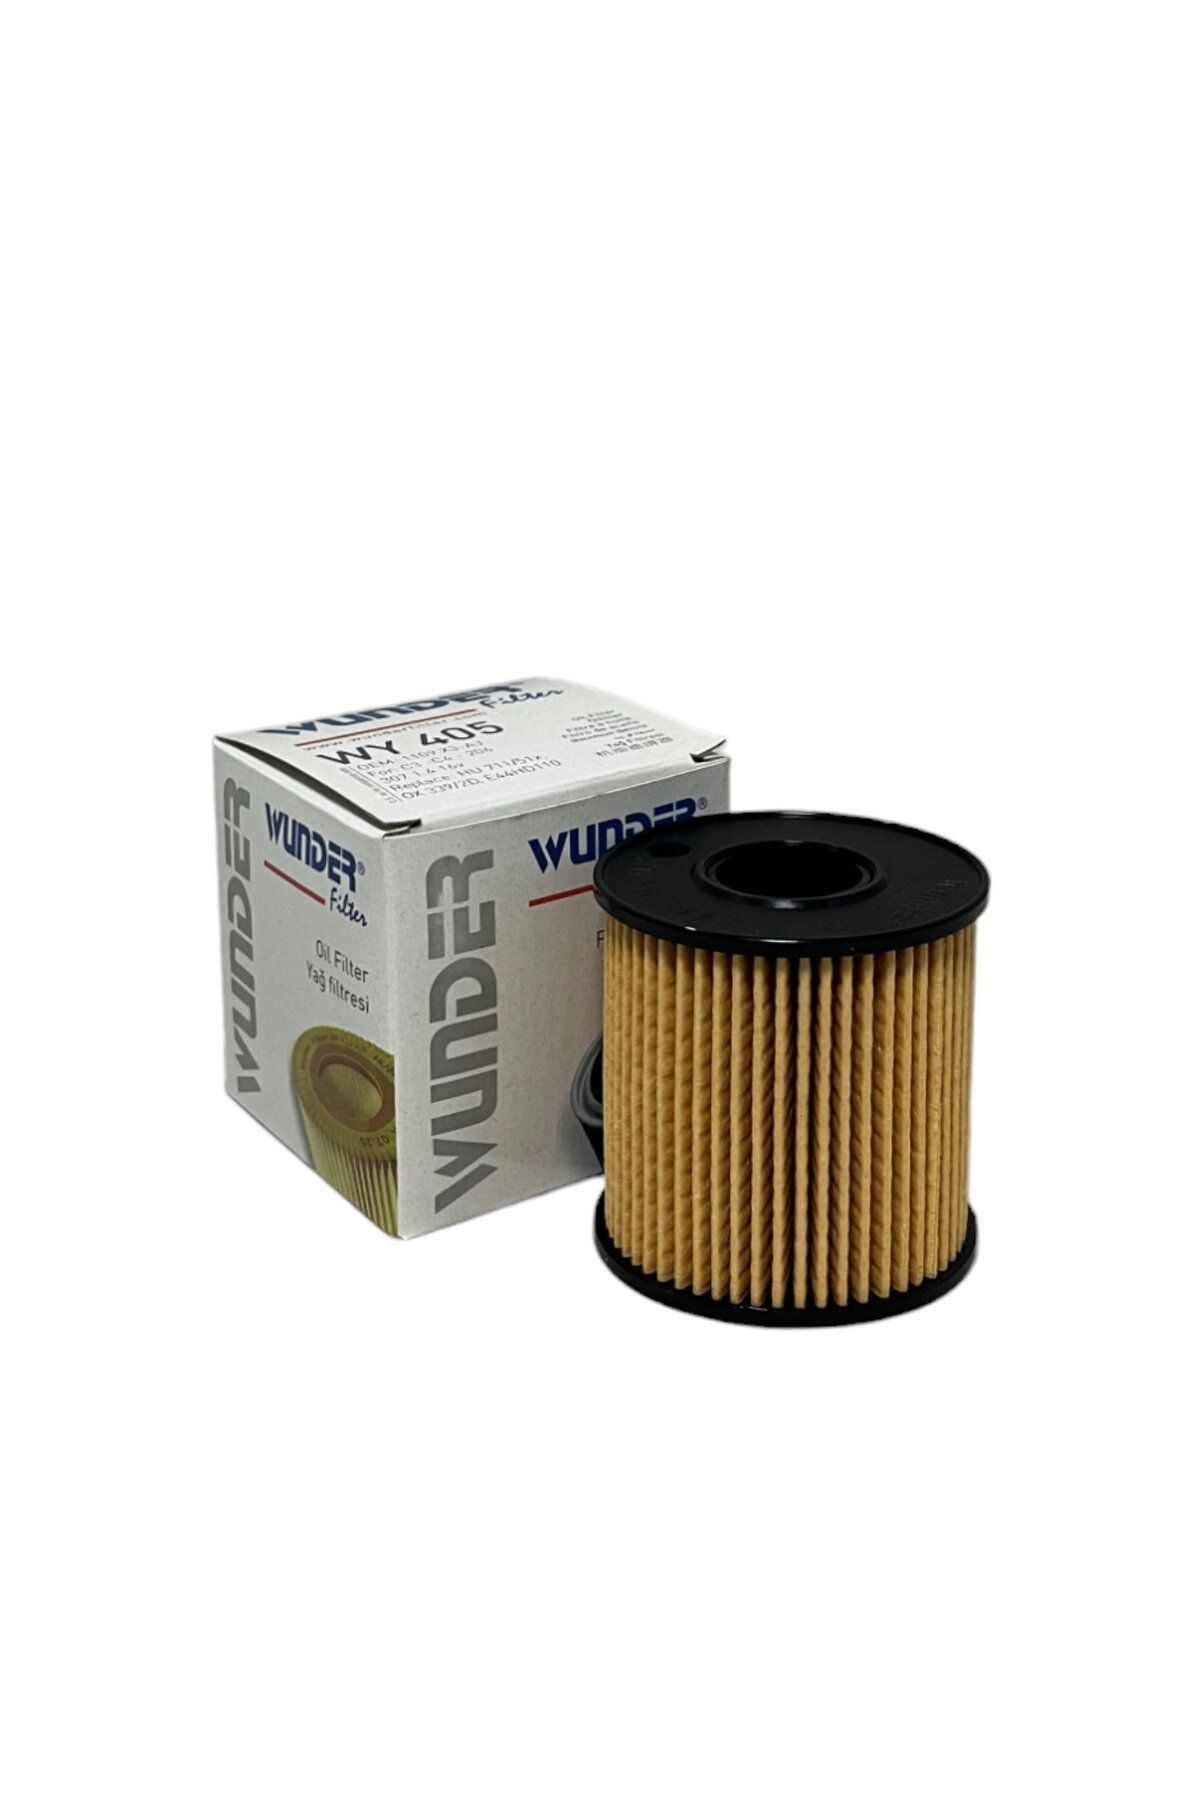 WUNDER Citroen C6 (2.2 Hdi 120-125 Kw) 2006-2010 Yağ Filtresi